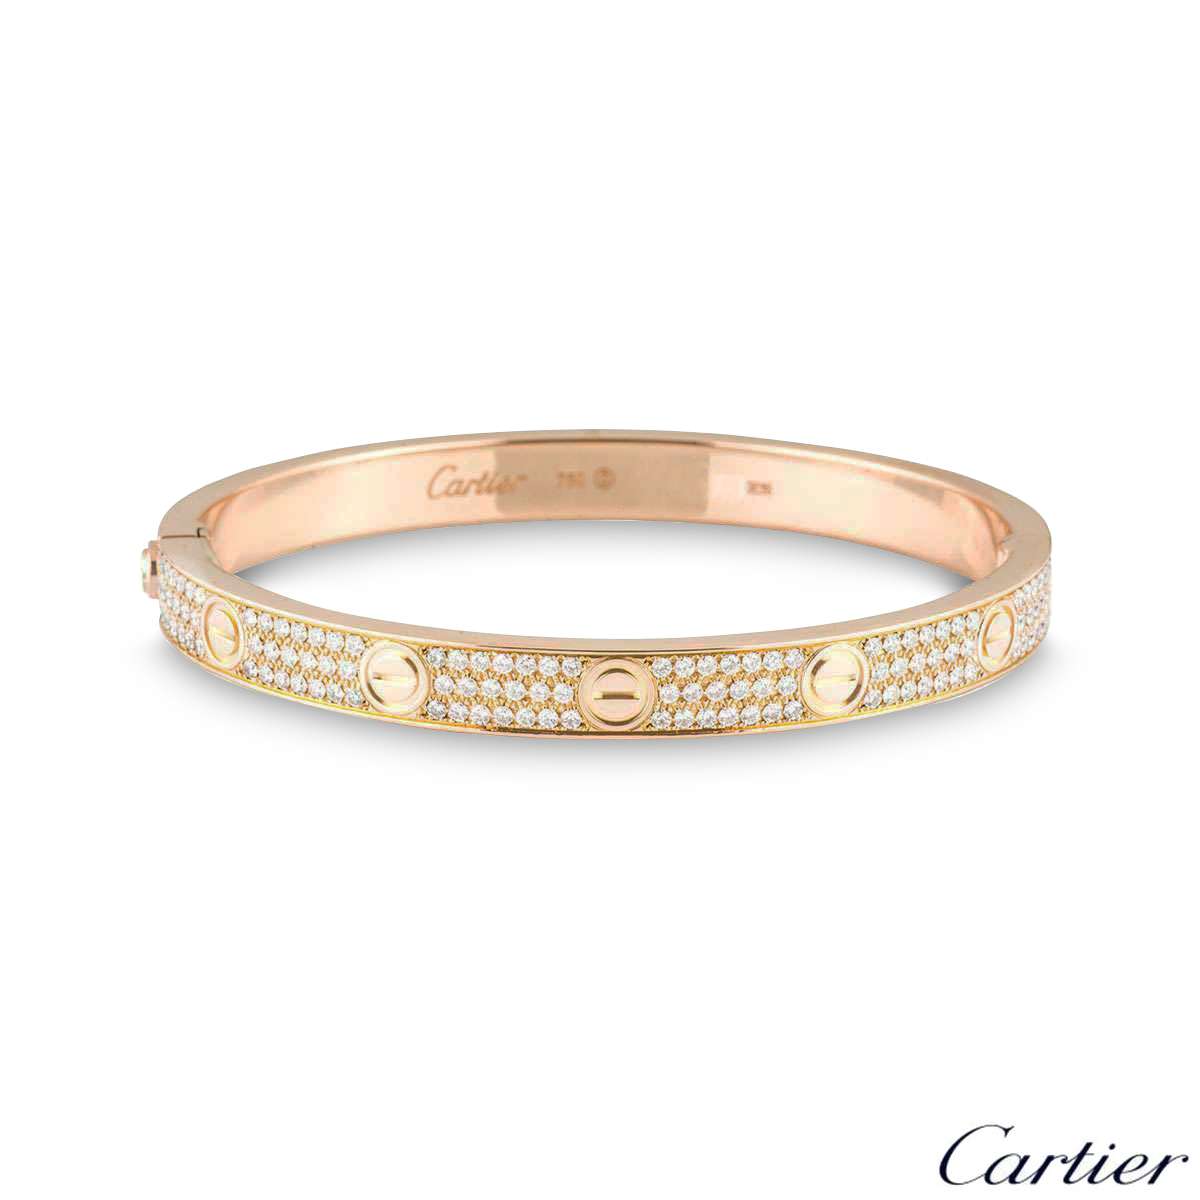 Cartier Rose Gold Full Pave Diamond Love Bracelet Size 16 N6036916